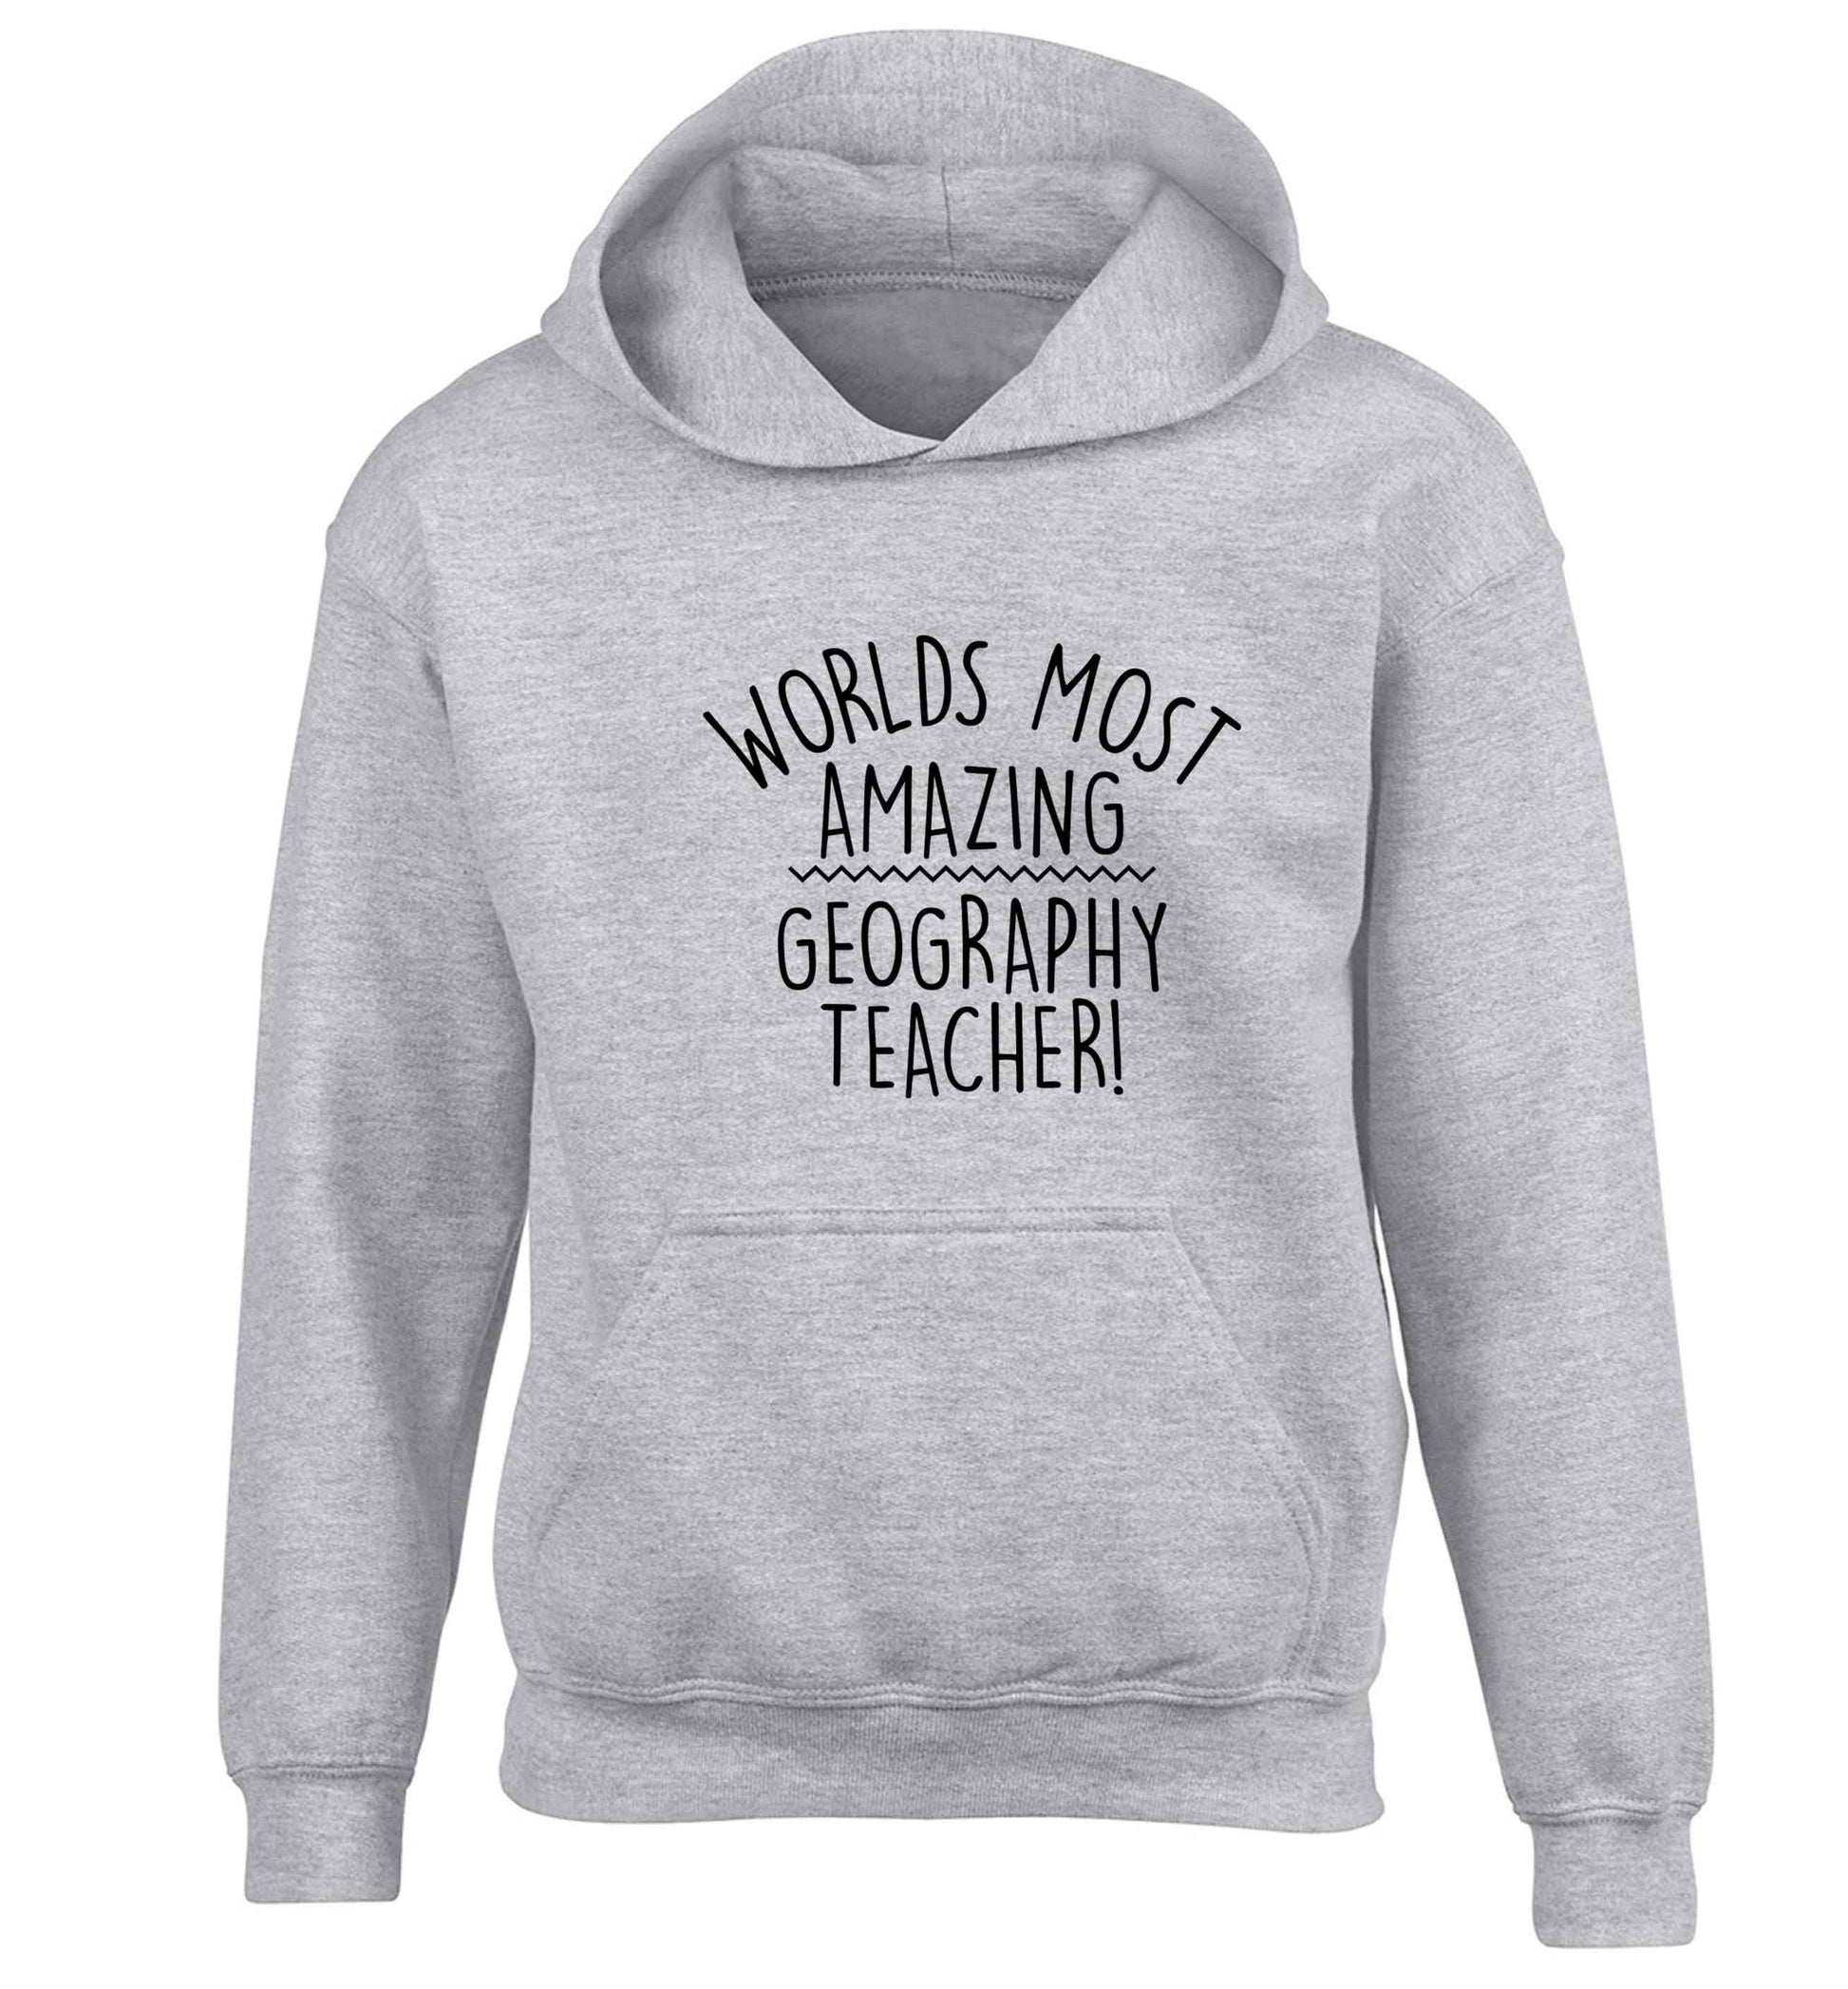 Worlds most amazing geography teacher children's grey hoodie 12-13 Years